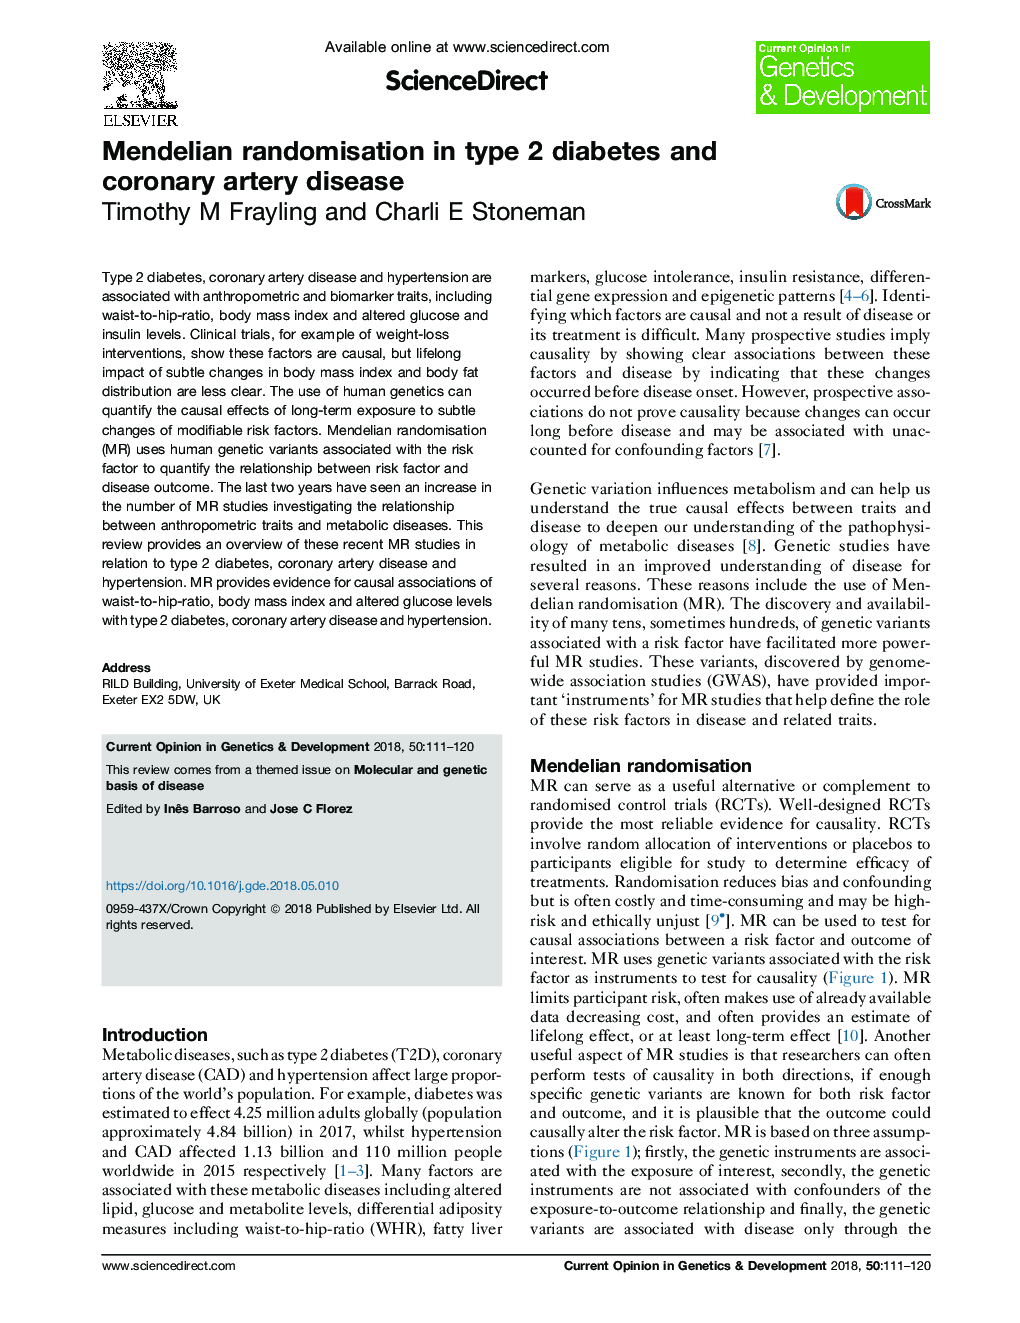 Mendelian randomisation in type 2 diabetes and coronary artery disease